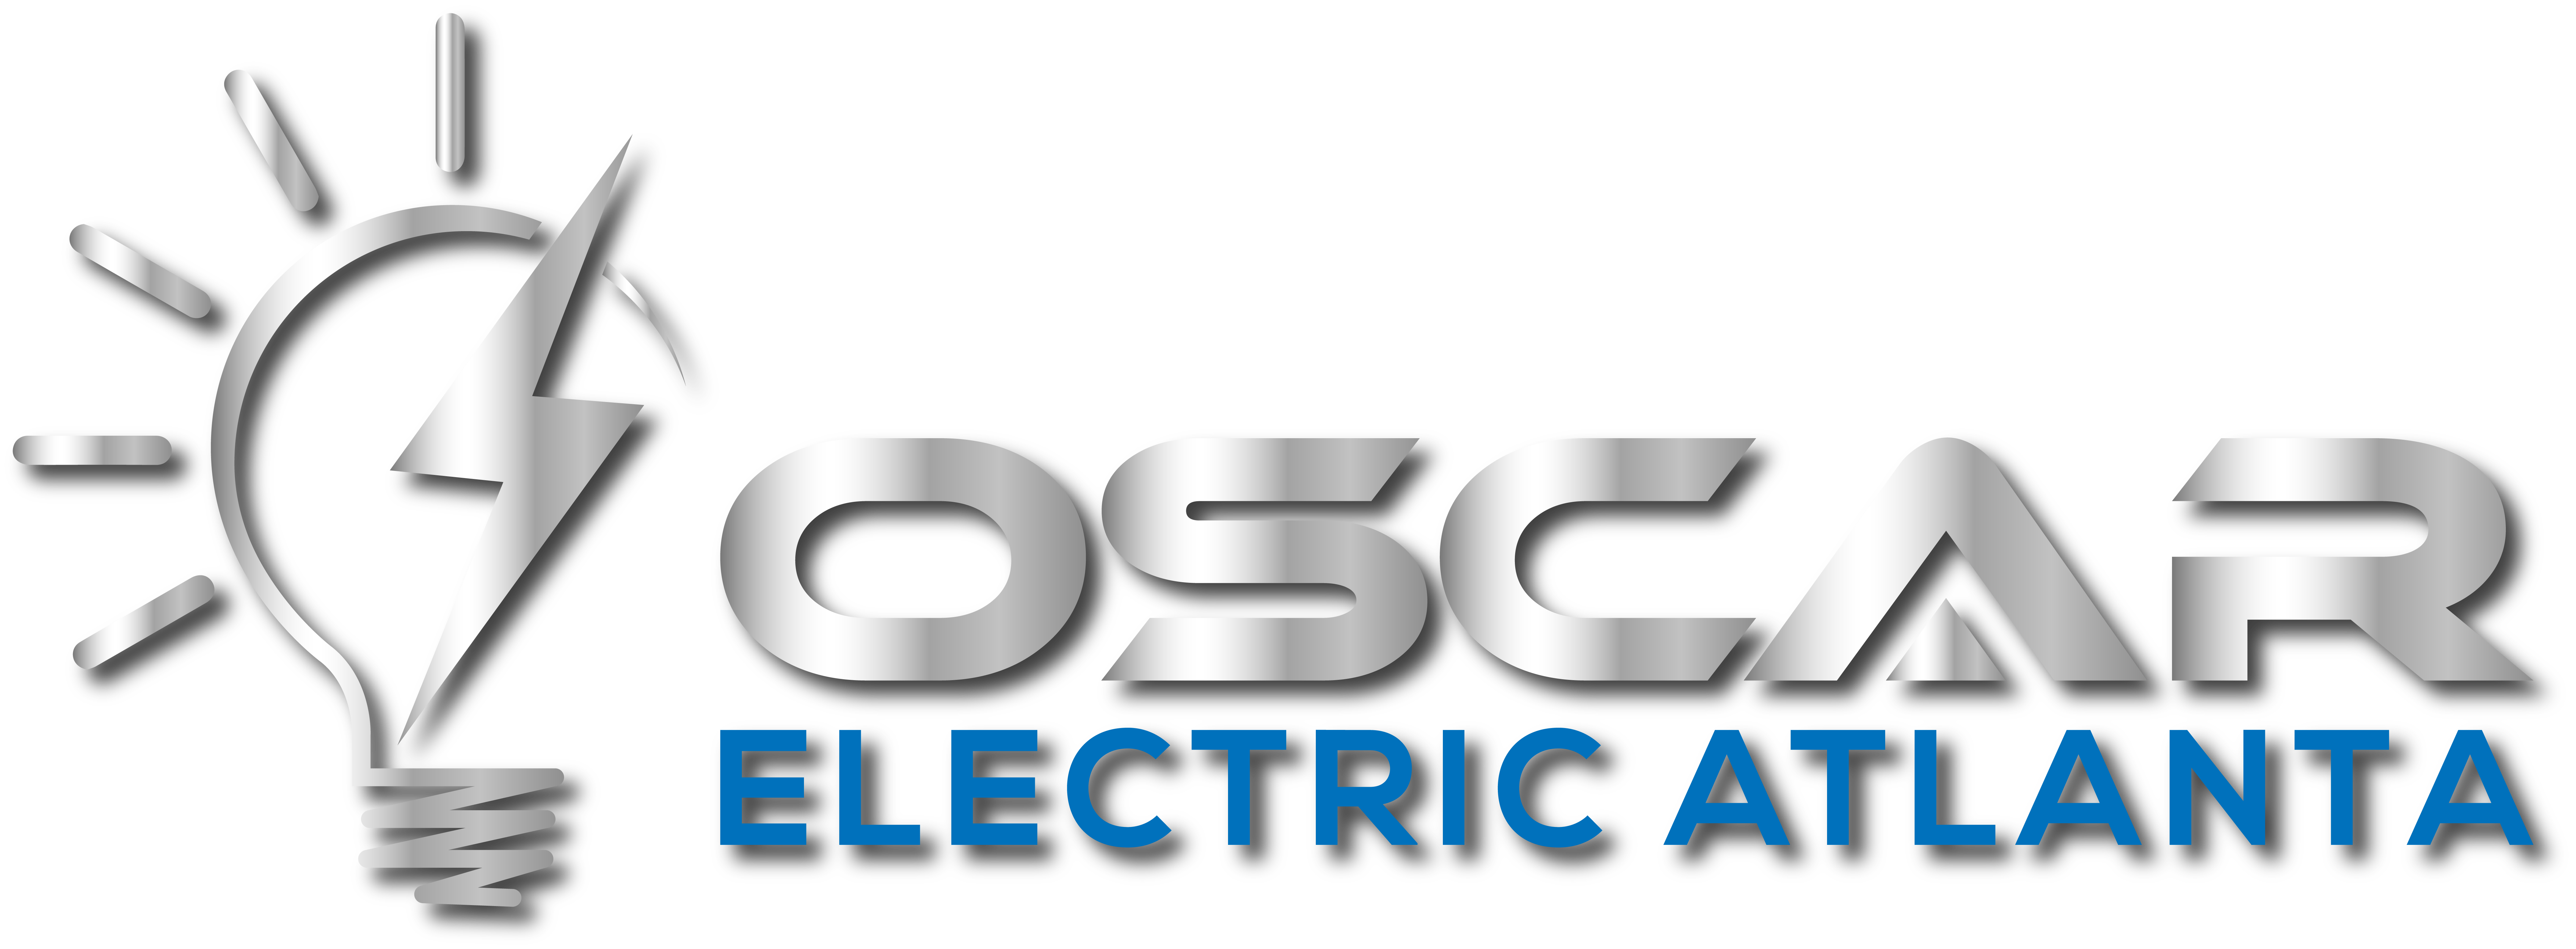 Georgia electric company